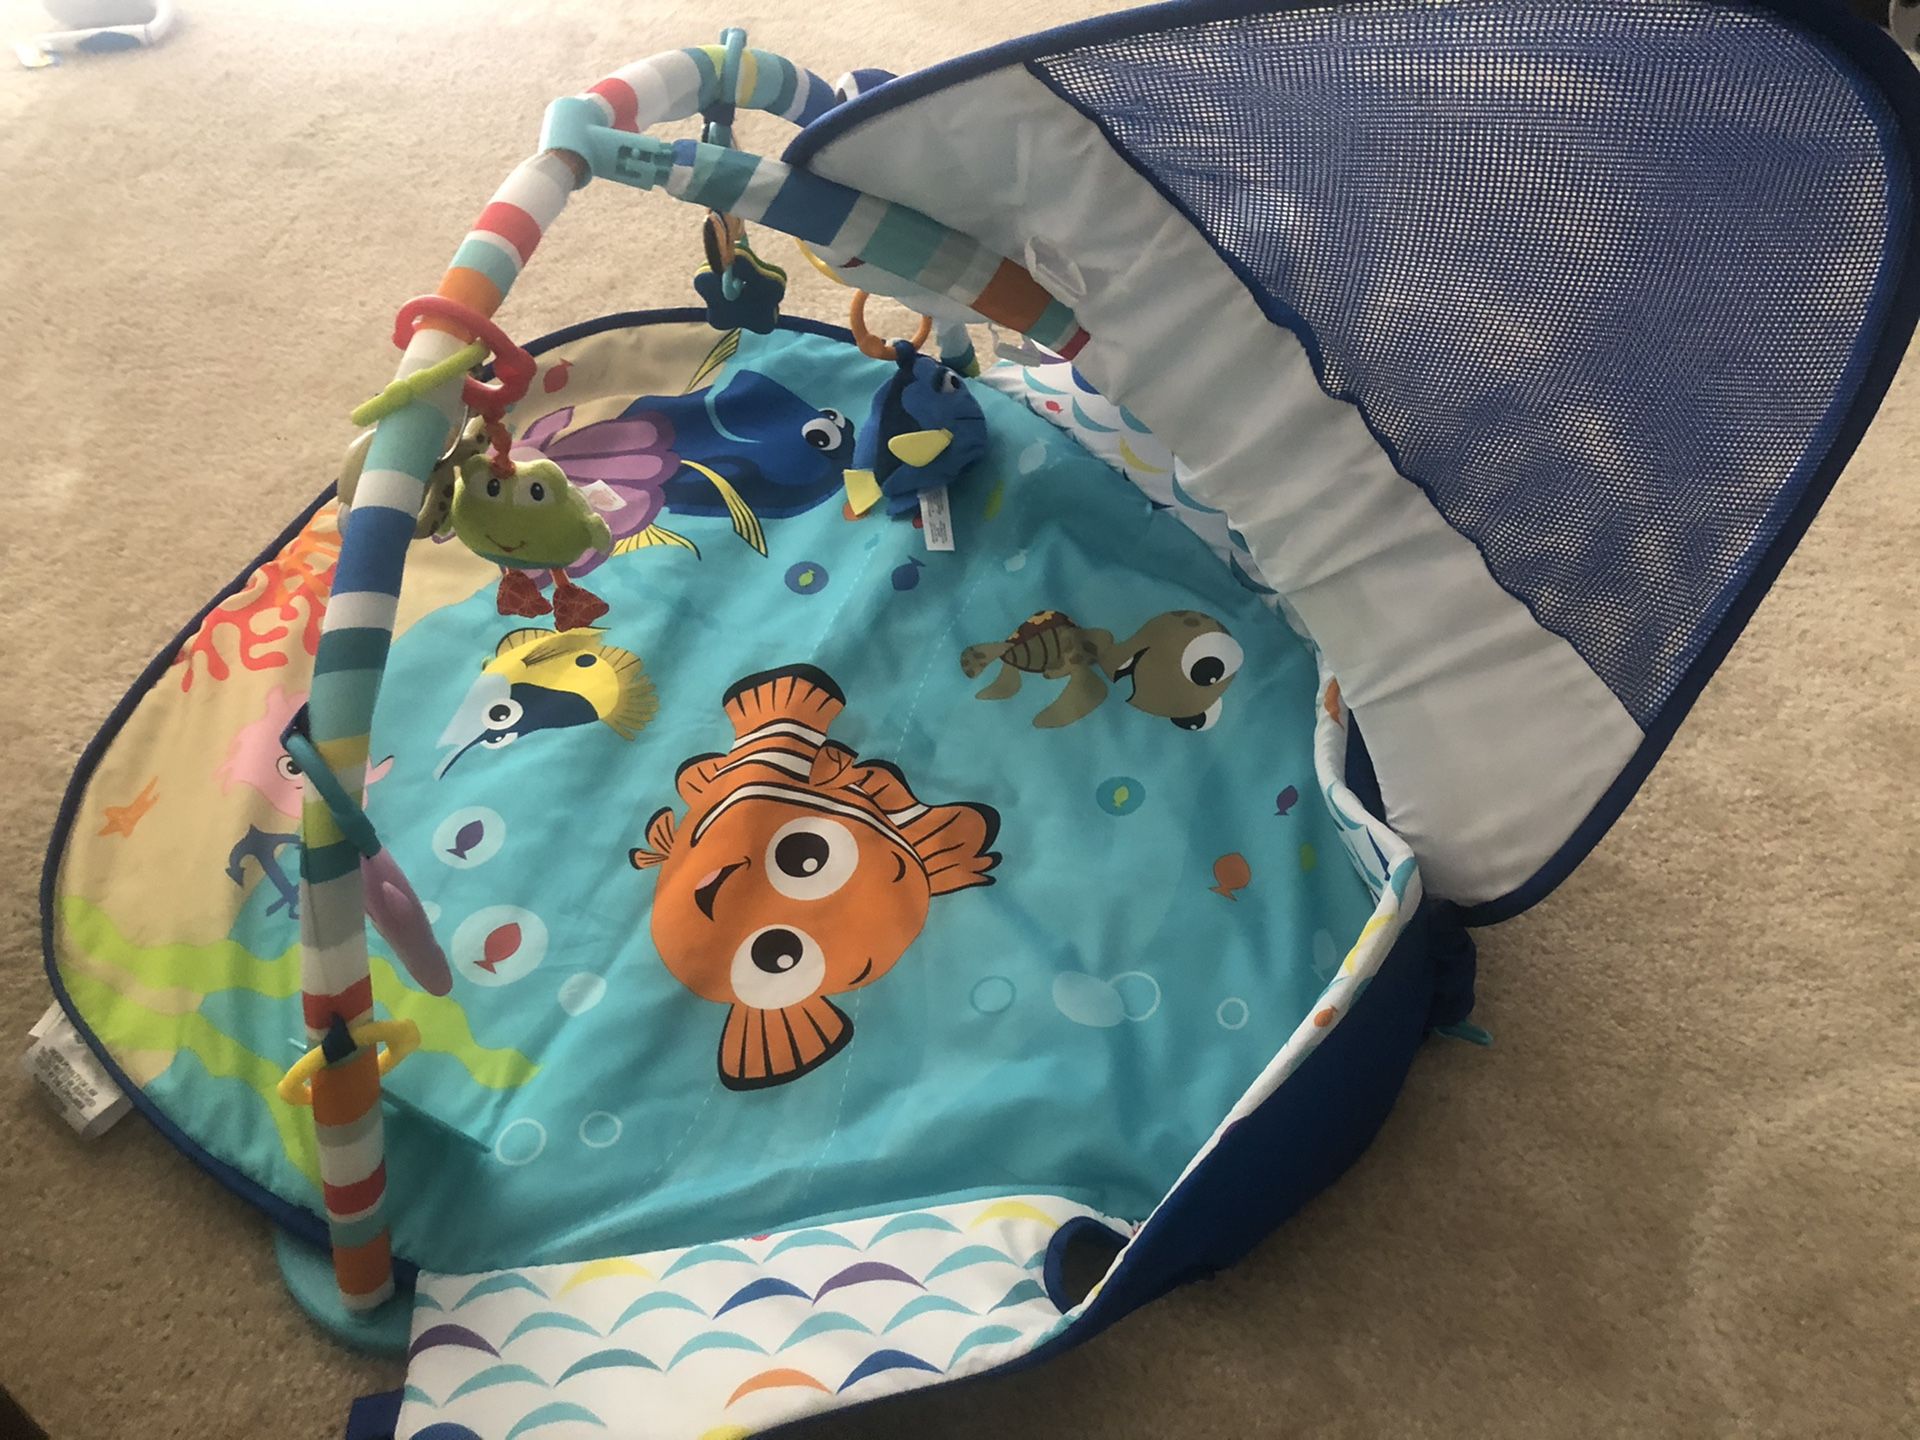 Disney Baby Finding Nemo Mr. Ray Ocean Lights Activity Gym